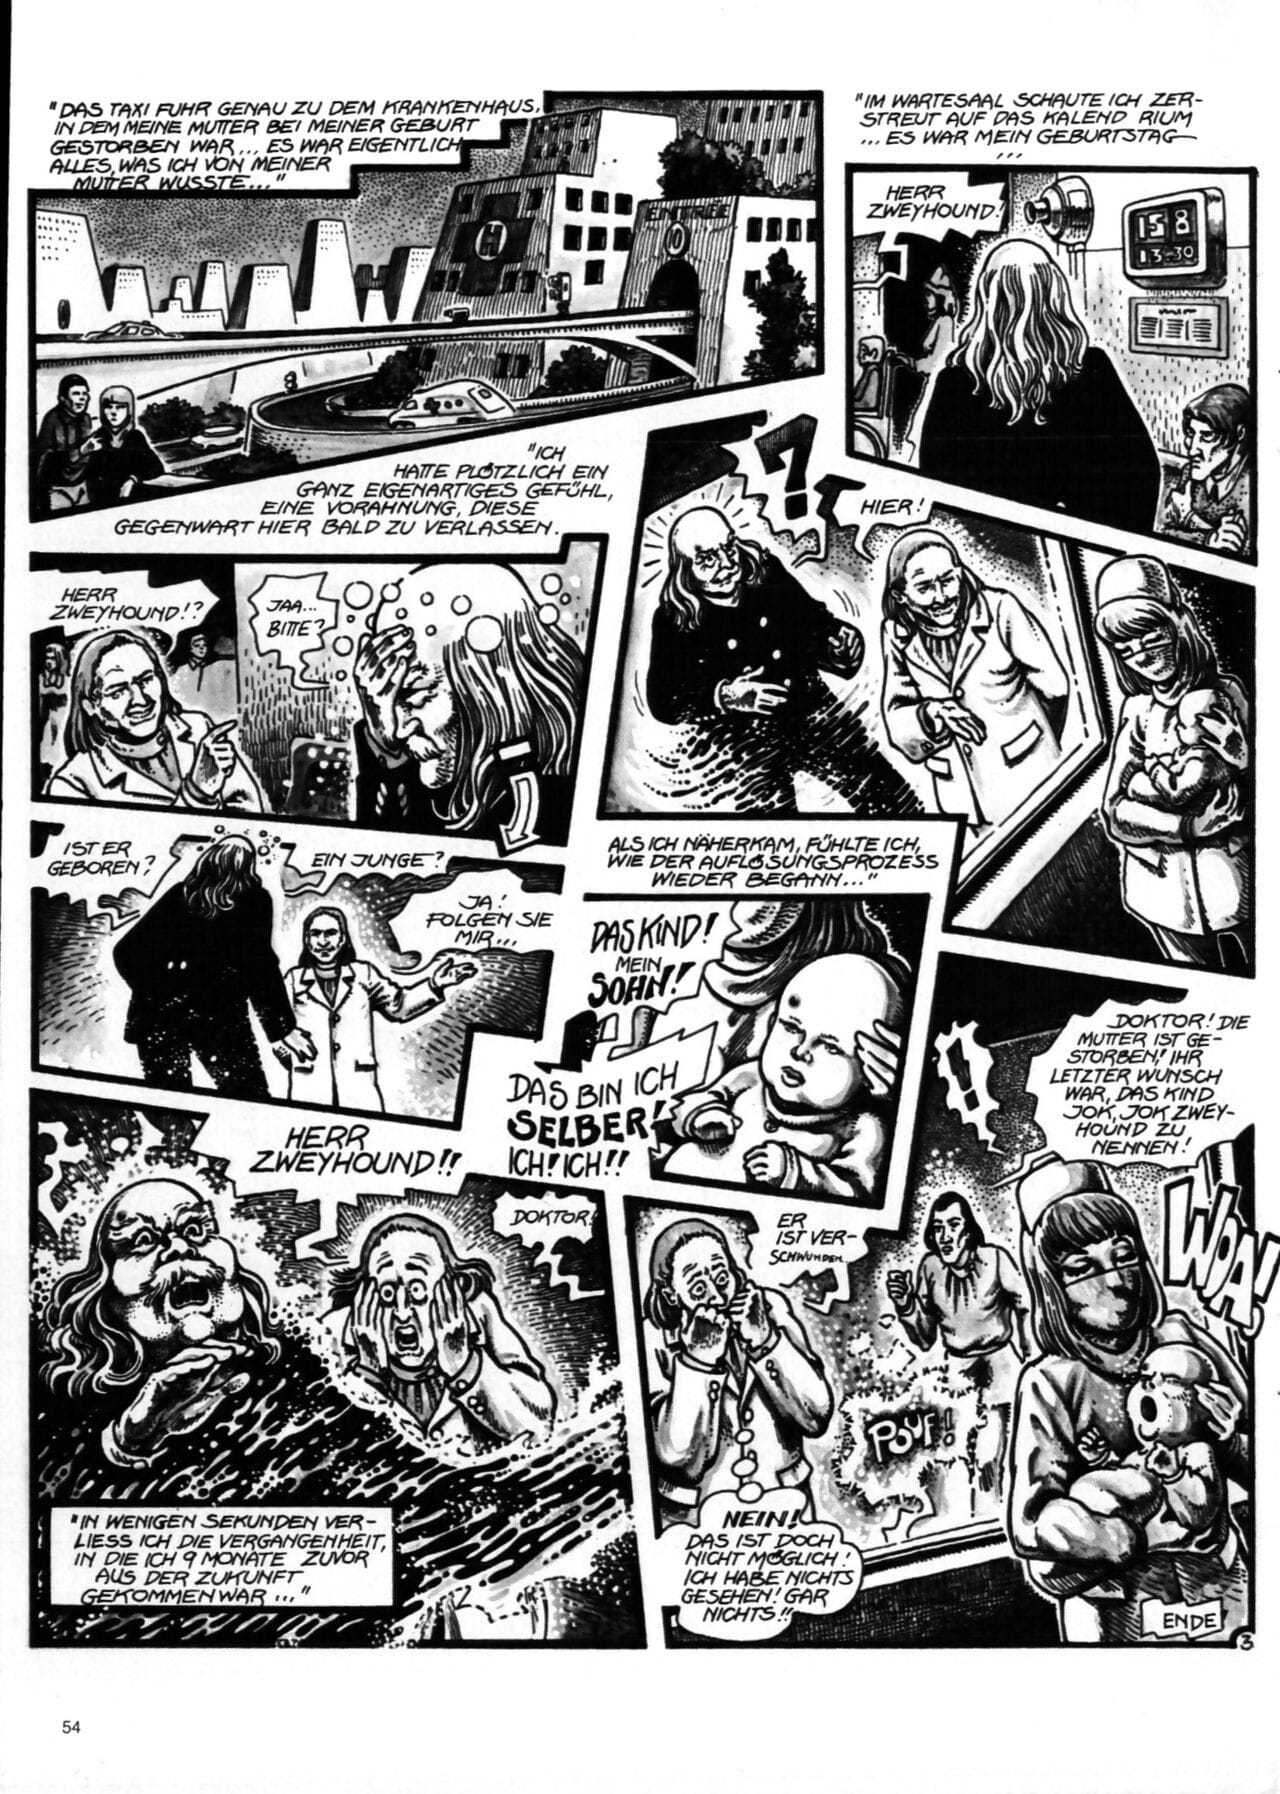 Schwermetall #009 - part 3 page 1